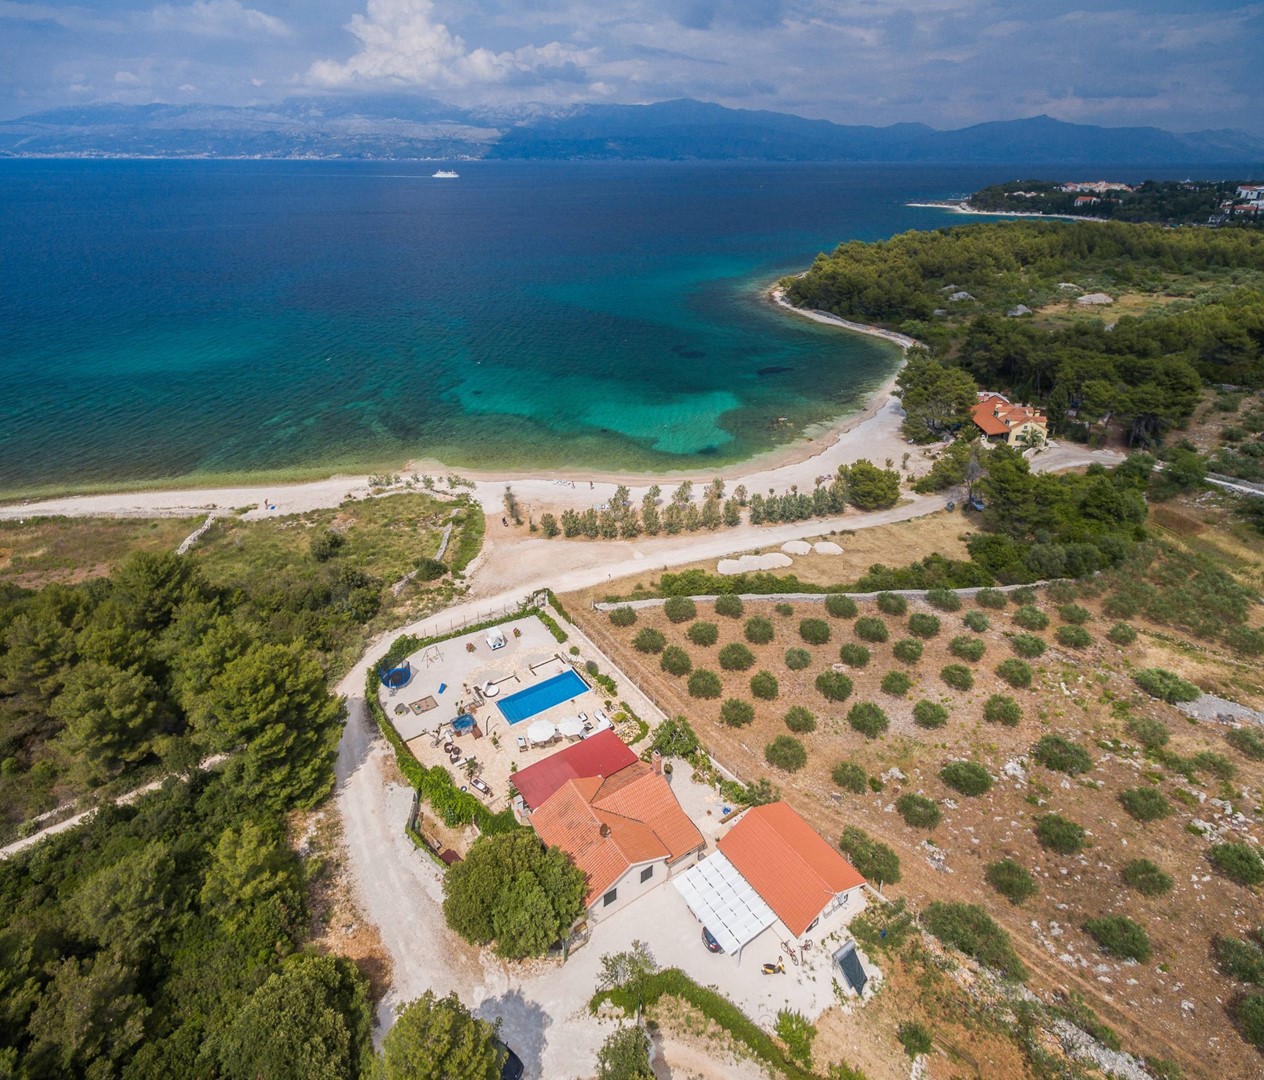 BRAC VILLAS - Villa Beach House Mir with the heated pool by the sea on Brac island - Mutnik